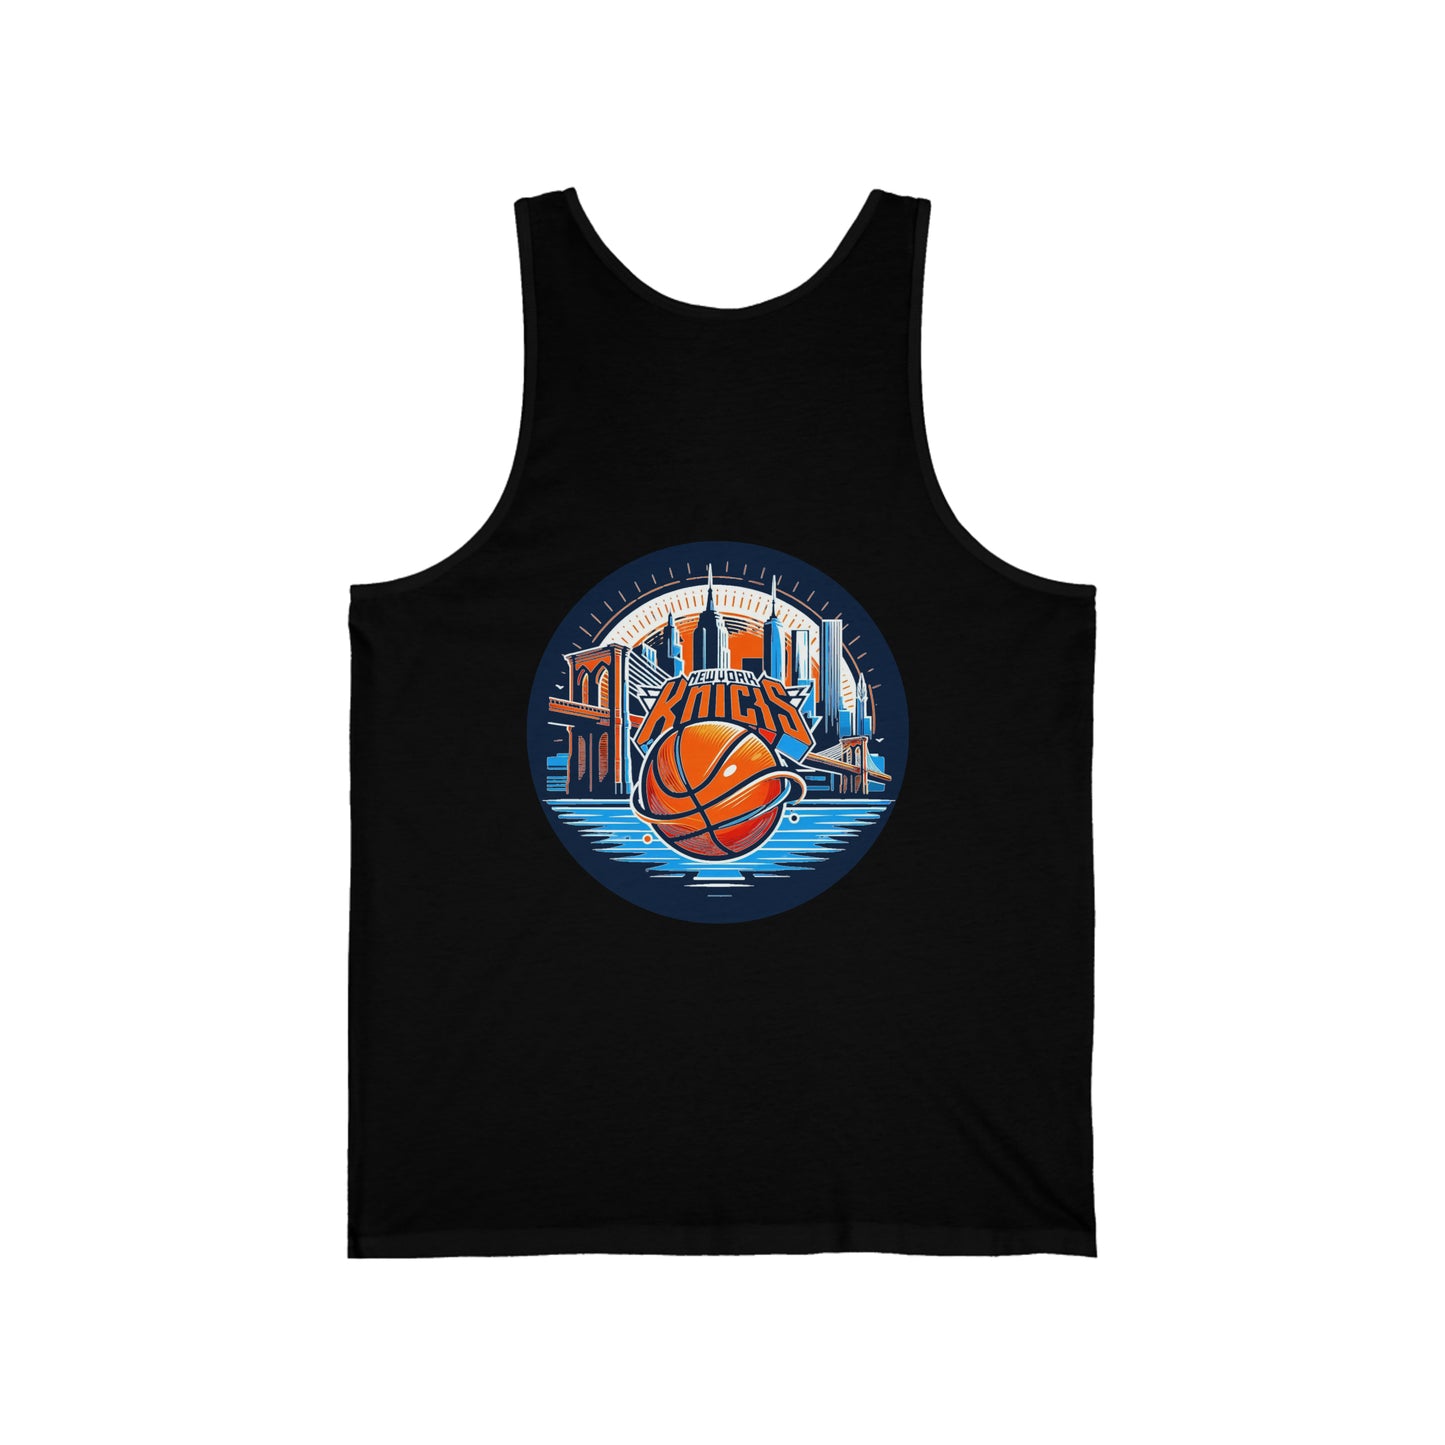 Cool and comfortable unisex Jersey Tank top (New York Knicks, NBA basketball team)